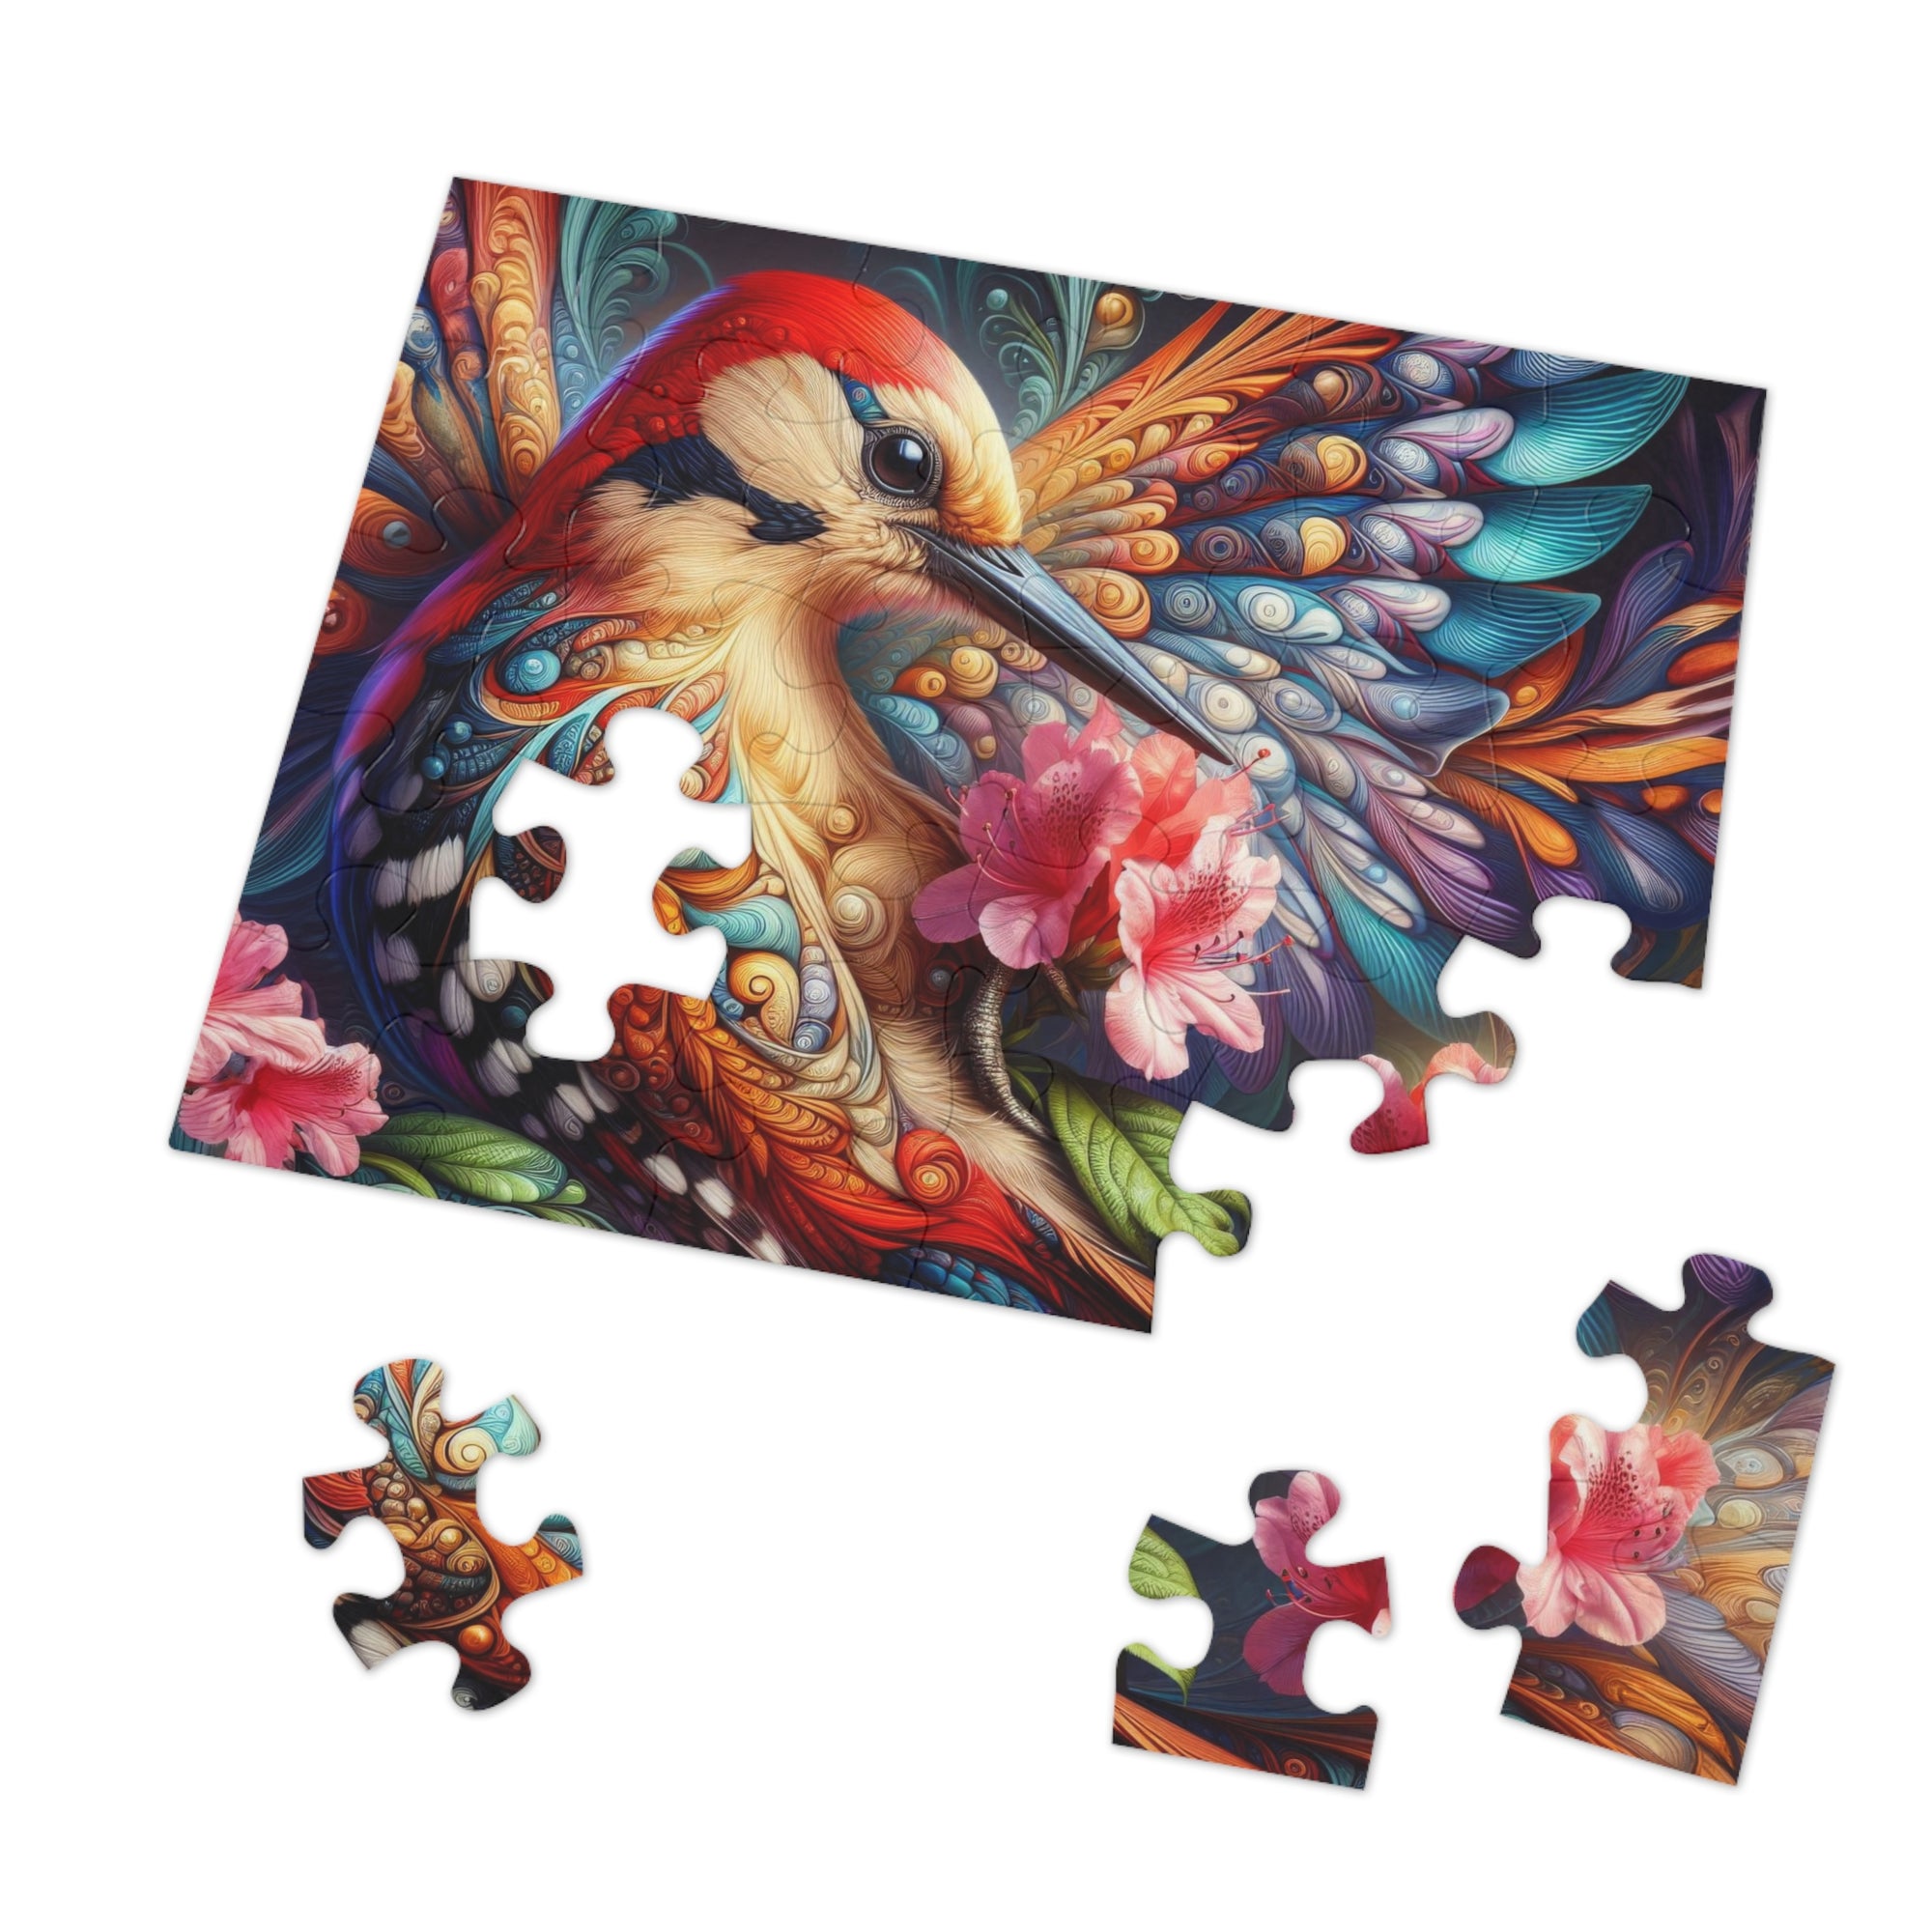 Azalea’s Guardian in Fractal Splendor Jigsaw Puzzle